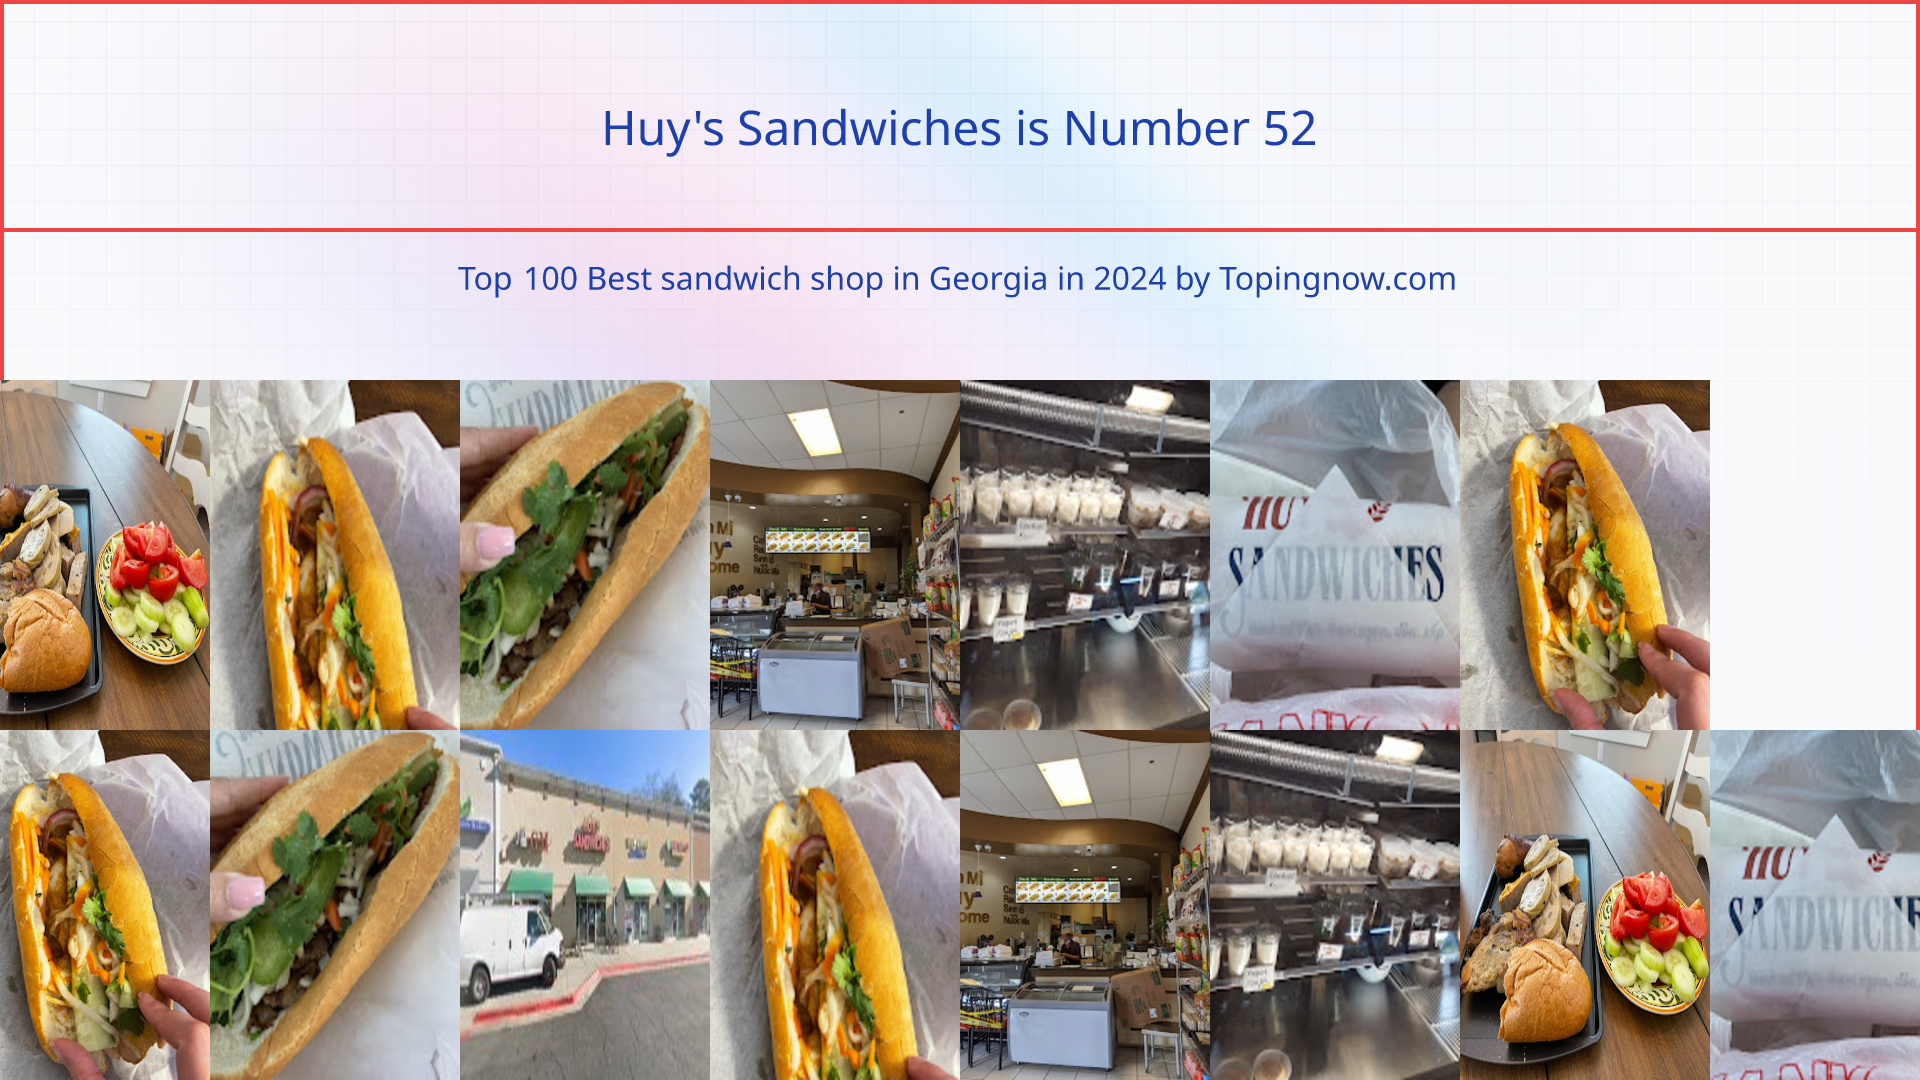 Huy's Sandwiches: Top 100 Best sandwich shop in Georgia in 2024